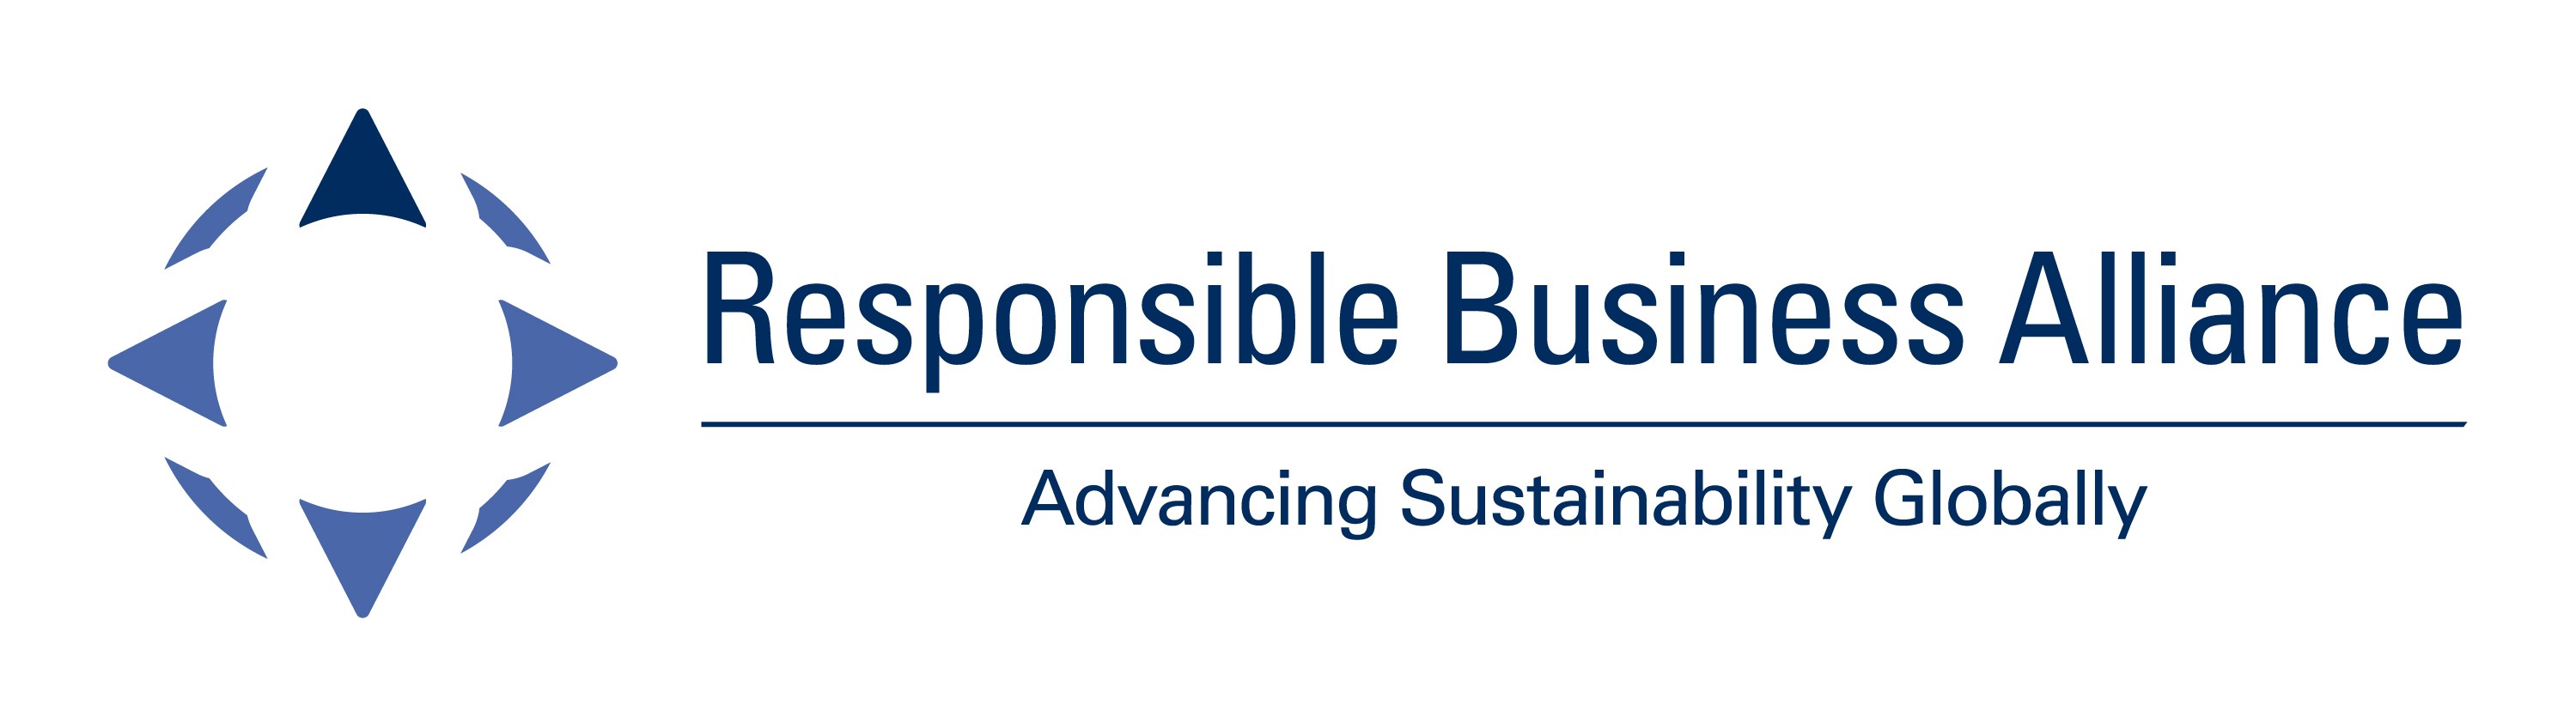 Responsible_Business_Alliance.jpg